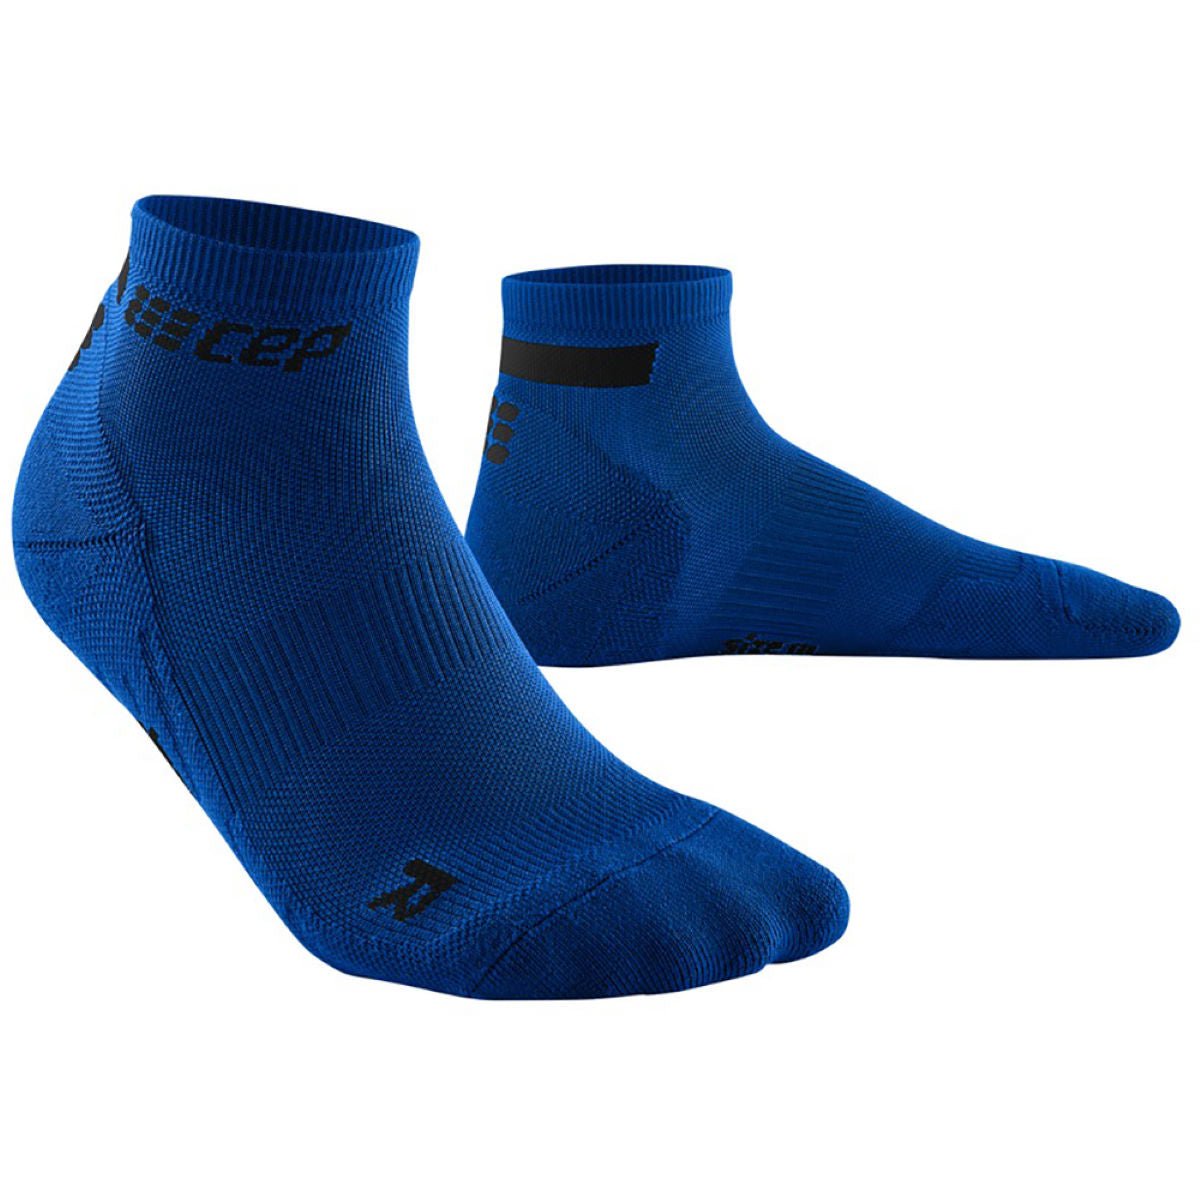 Men's CEP The Run Compression Socks 4.0 – Commonwealth Running Co.